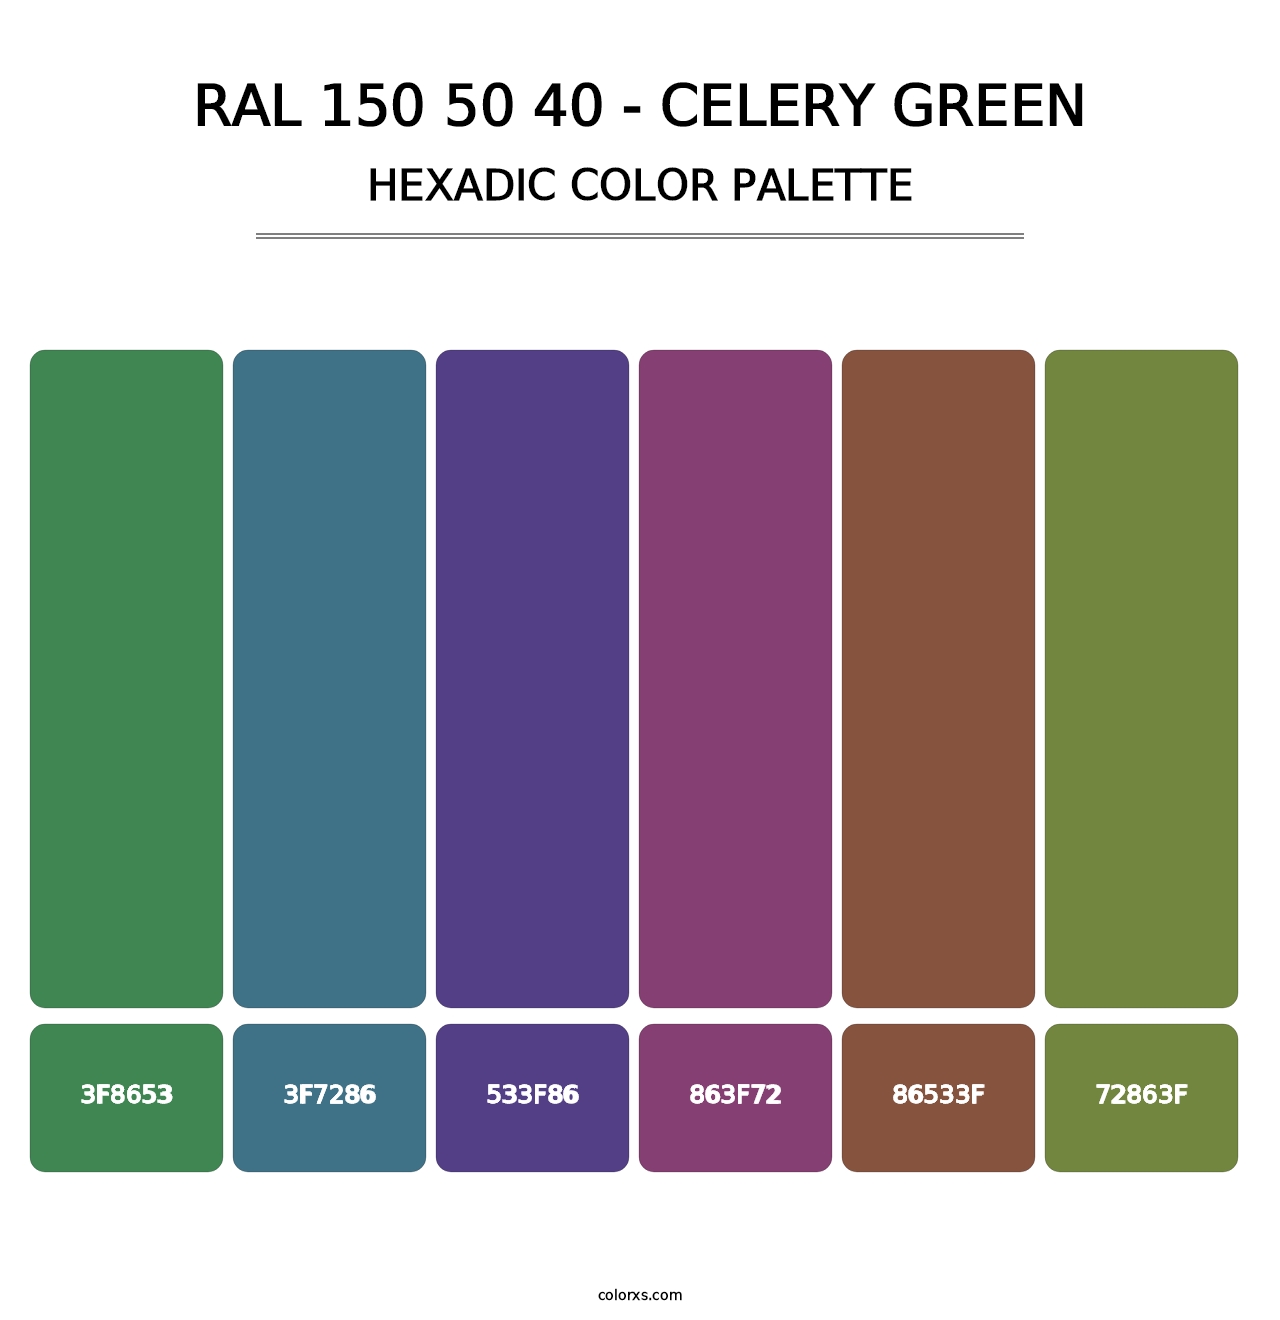 RAL 150 50 40 - Celery Green - Hexadic Color Palette